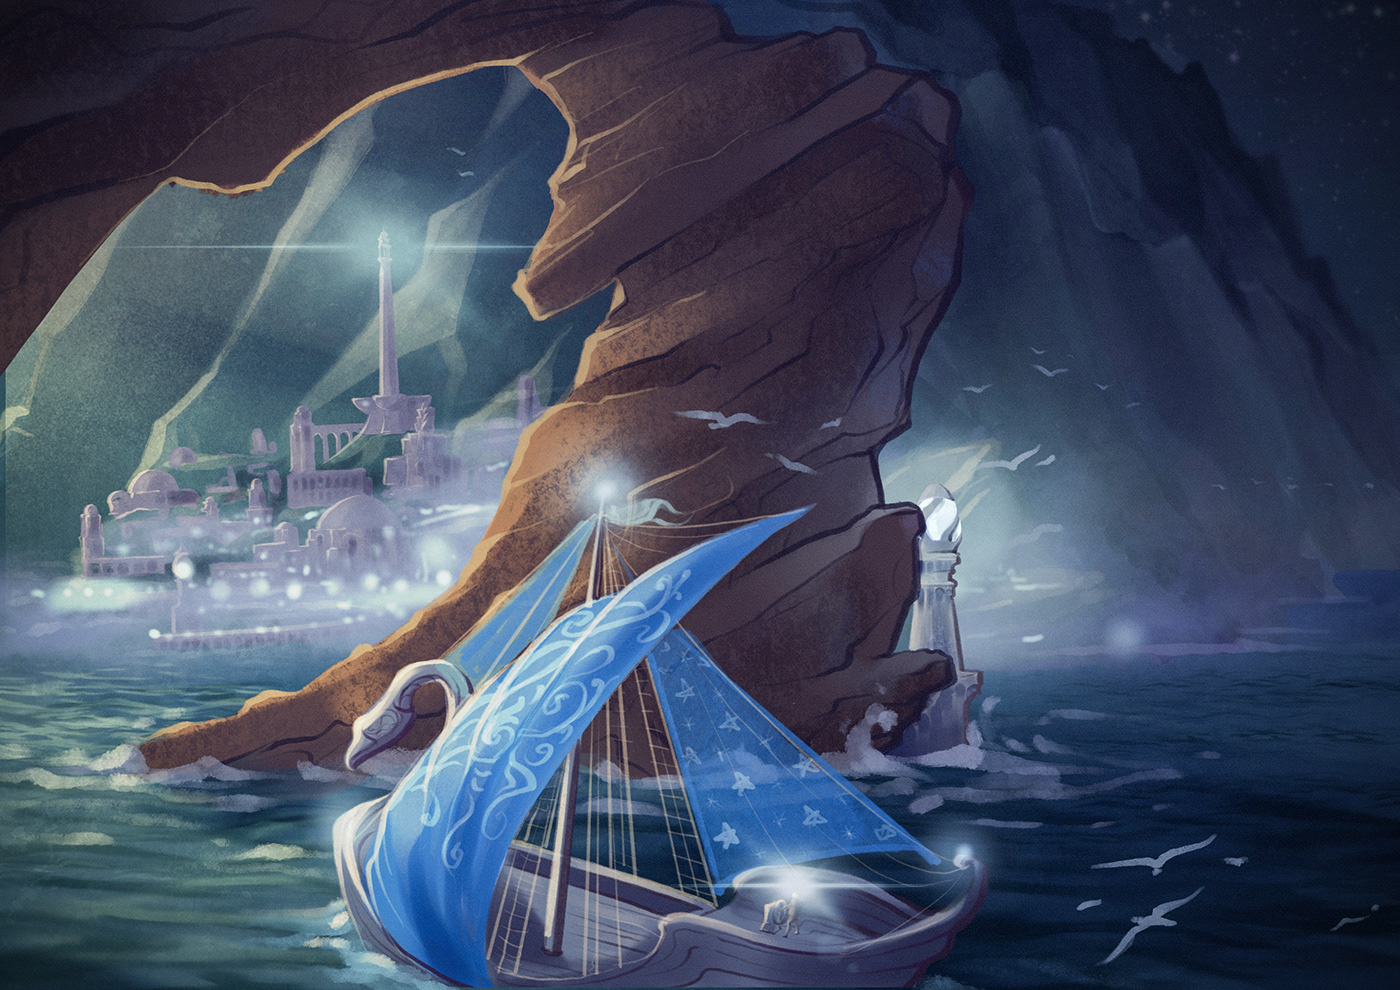 Alqualonde - Elven Harbor in the Tolkien's fictional universe.